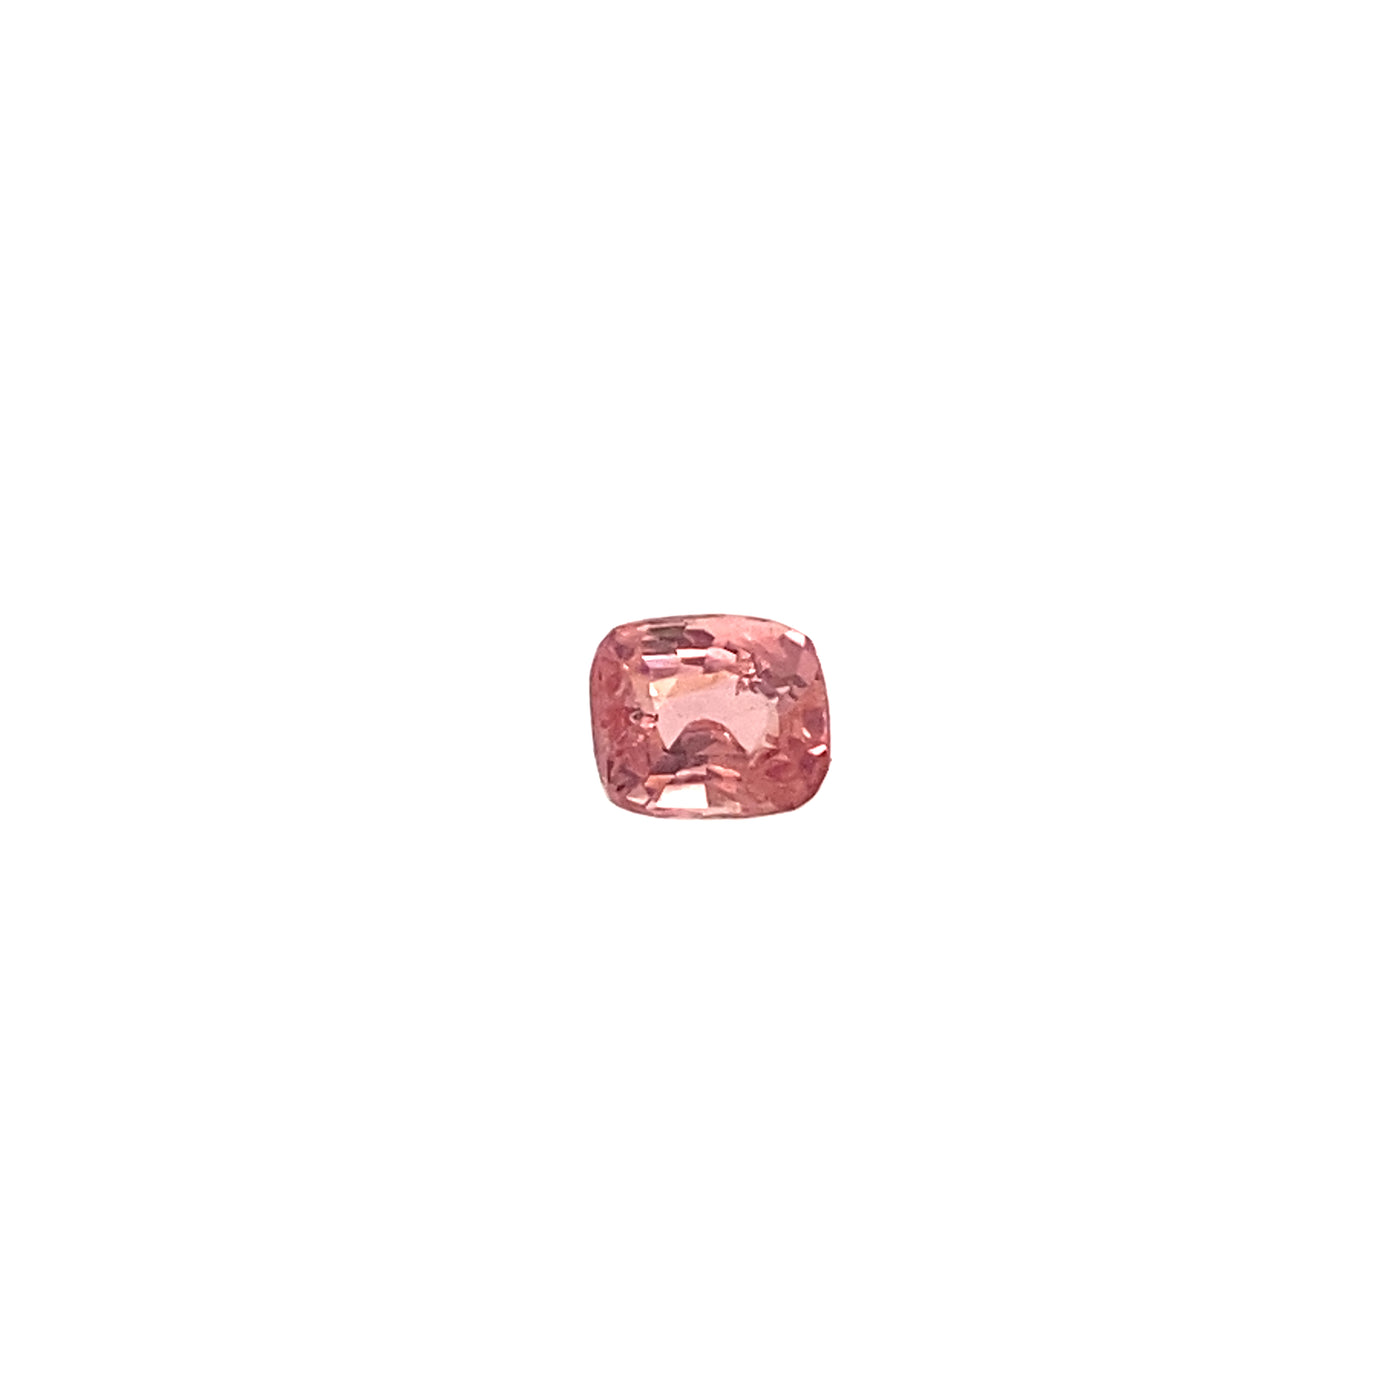 Spinelle rose orange 0.6 carats coussin